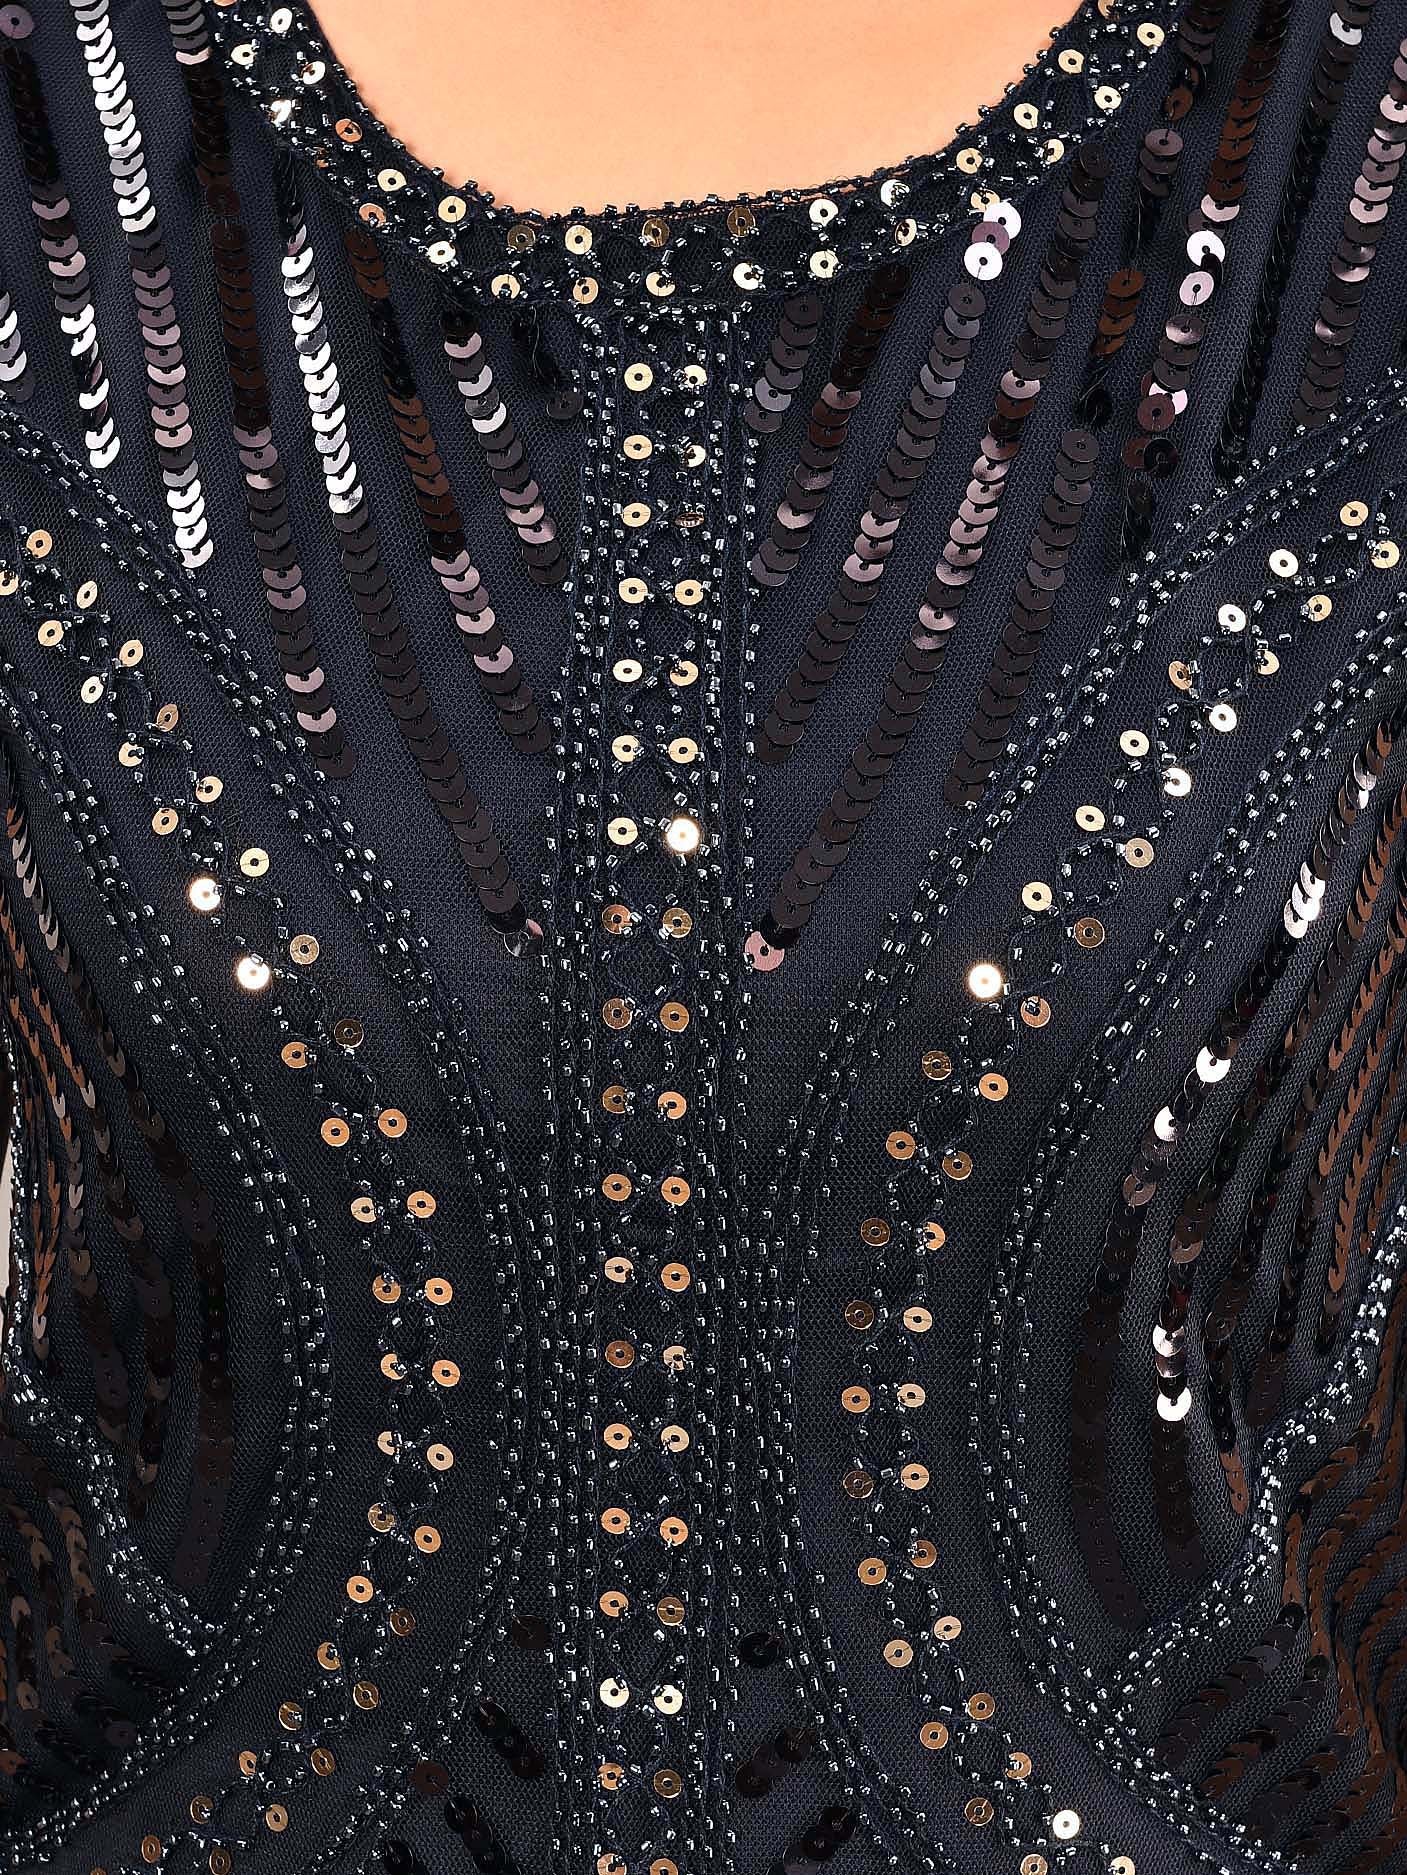 Sequined Bodycon Net Dress